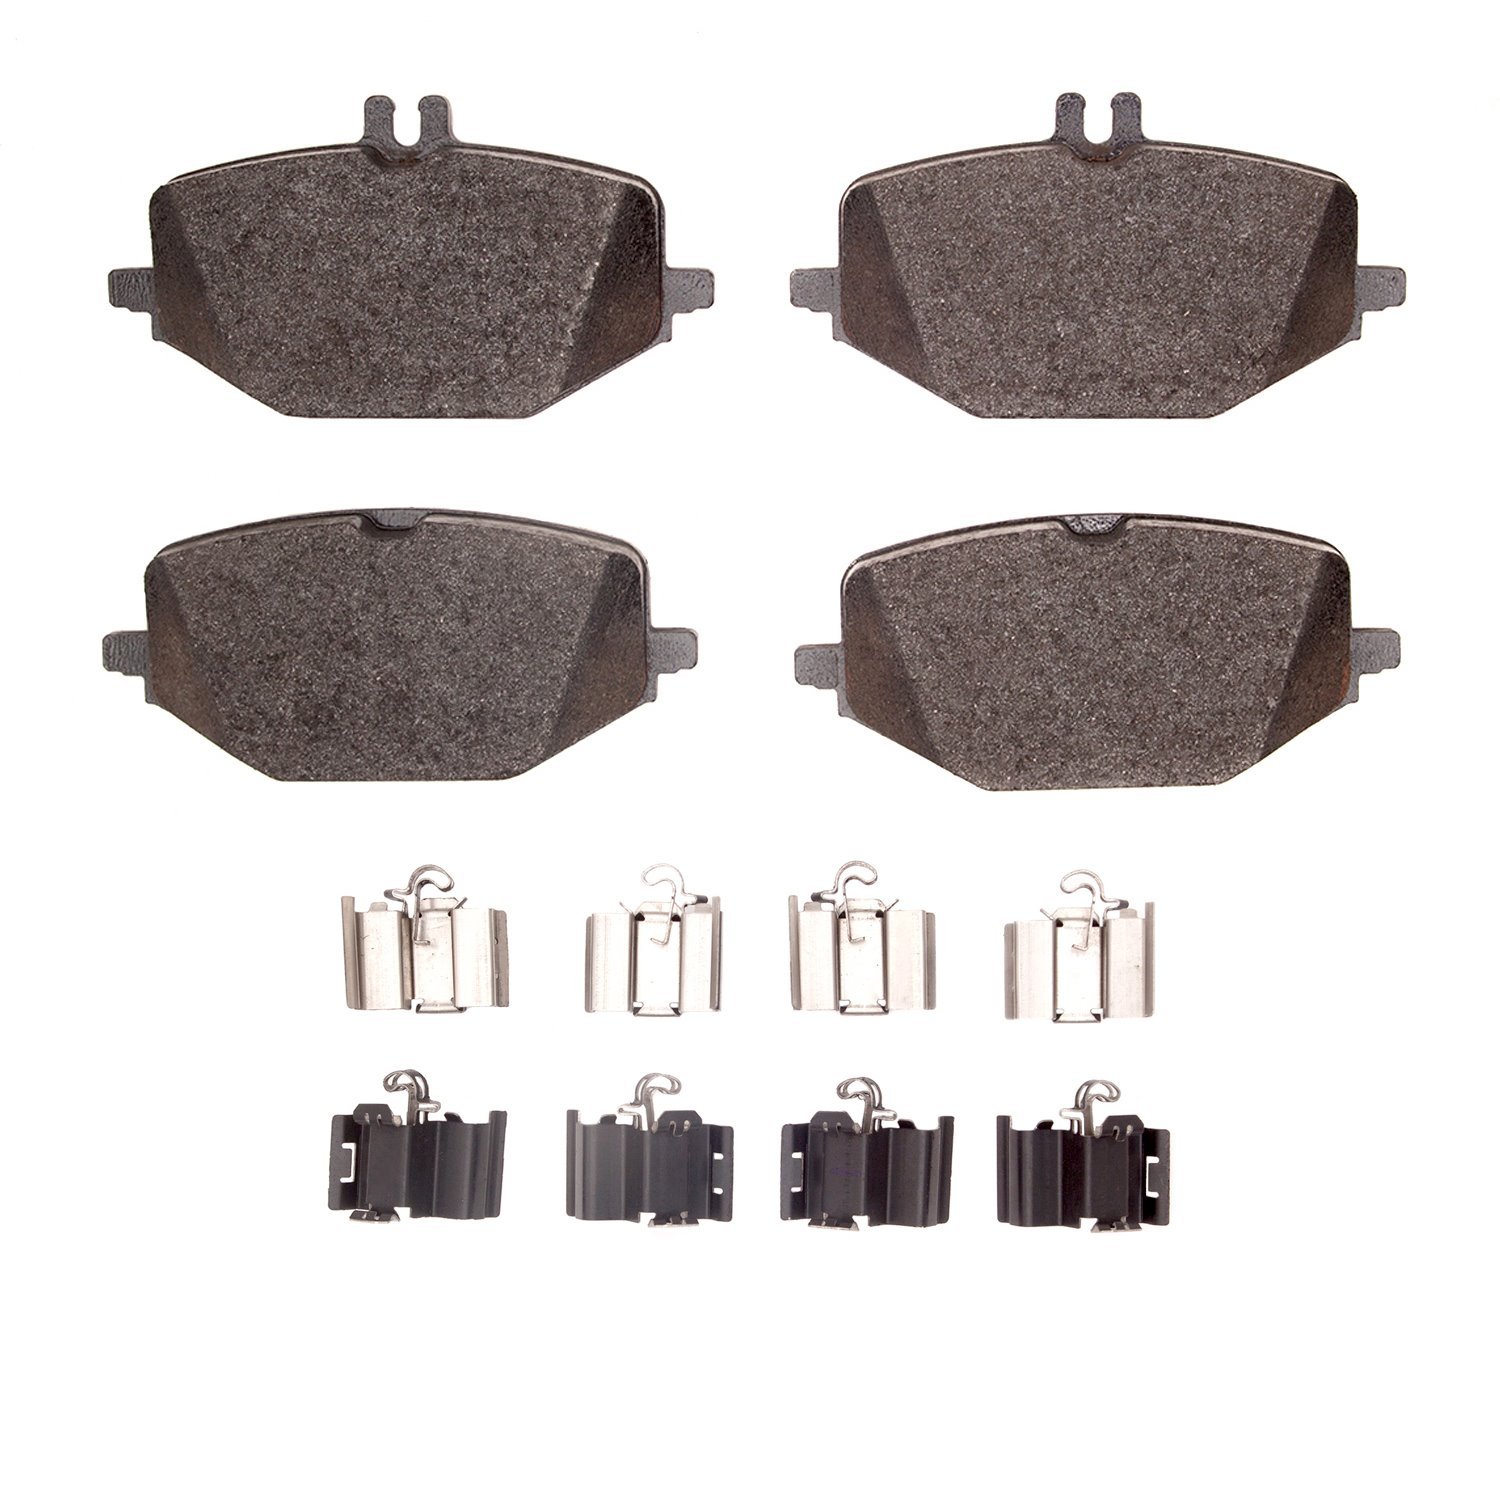 1551-2210-01 5000 Advanced Low-Metallic Brake Pads & Hardware Kit, Fits Select Mercedes-Benz, Position: Rear